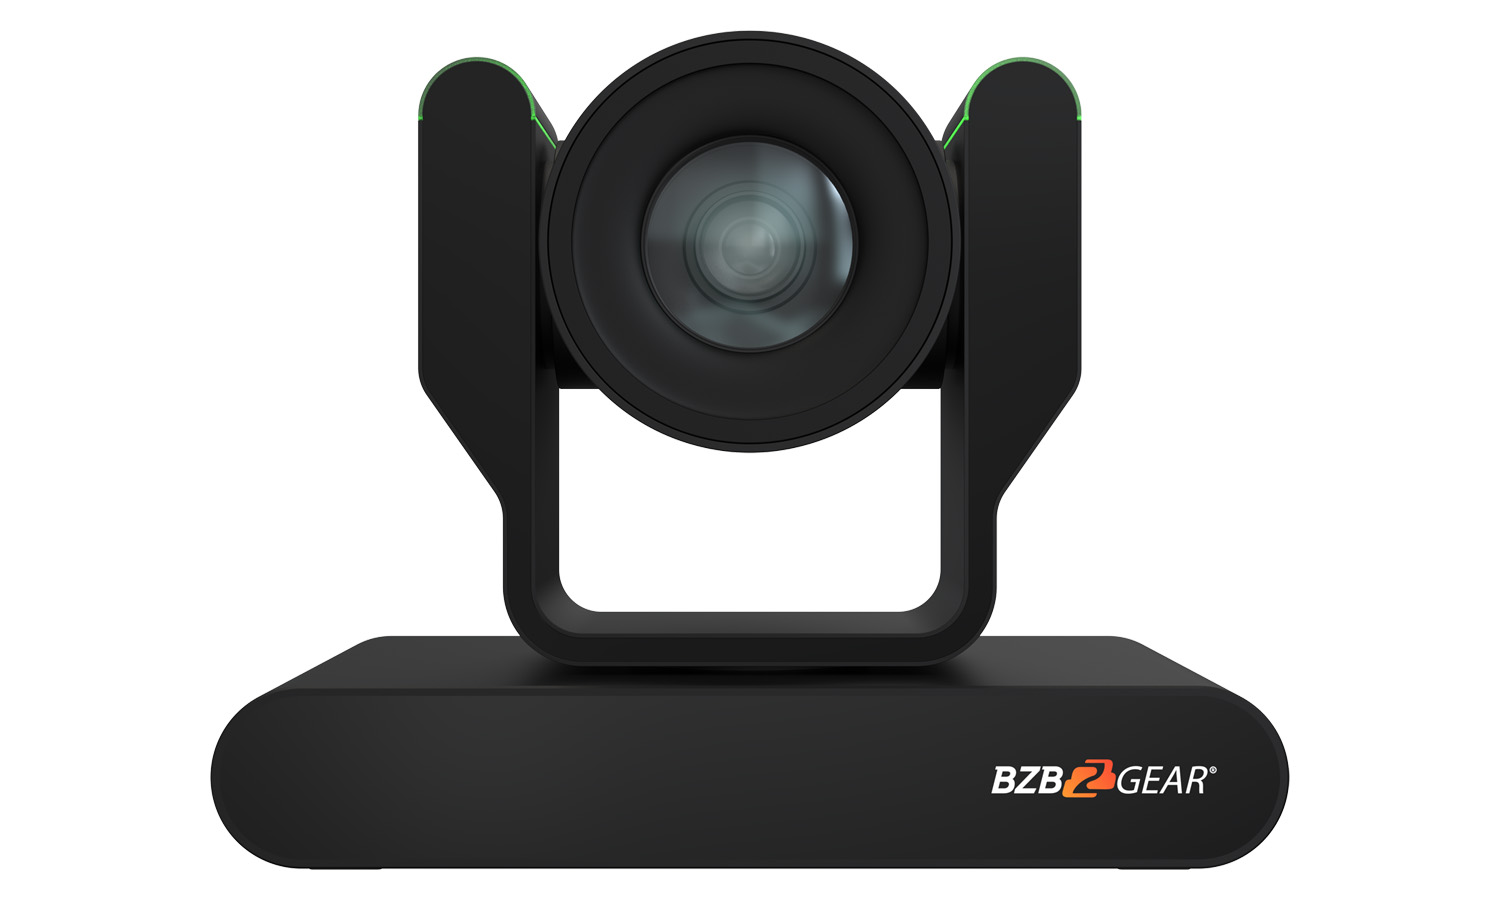 BG-ADAMO-4K25X-B 25X 4K@60Hz HDMI2.0/12G-SDI/USB 2.0/USB 3.0 Live Streaming PTZ Camera with Tally Lights (Black) by BZBGEAR